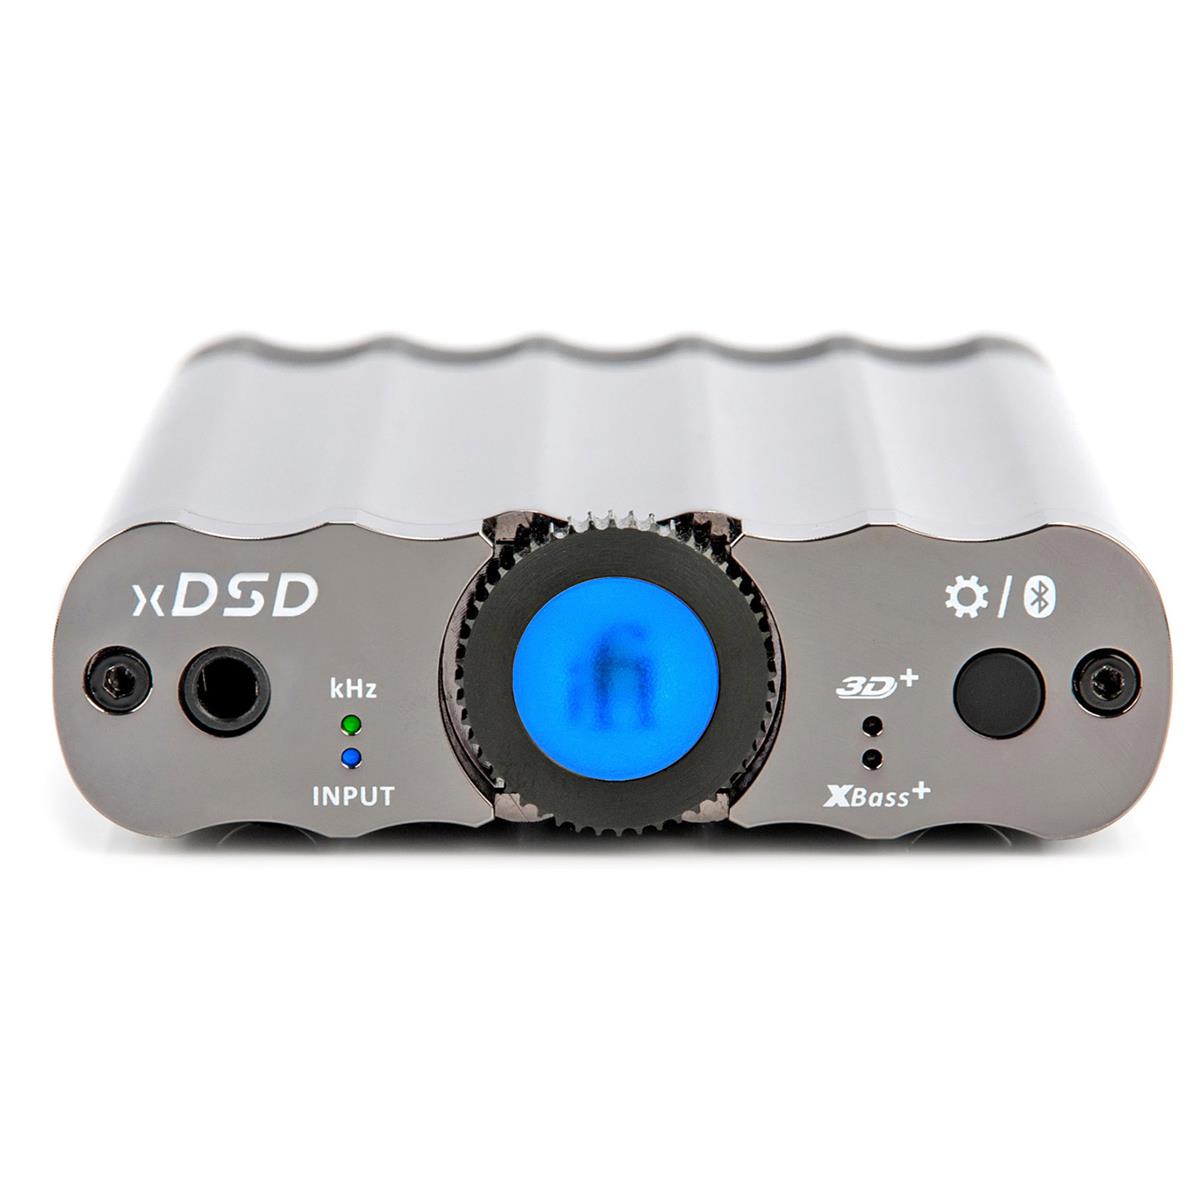 iFi AUDIO xDSD Bluetooth DAC & Headphone Amplifier $199 + free s/h